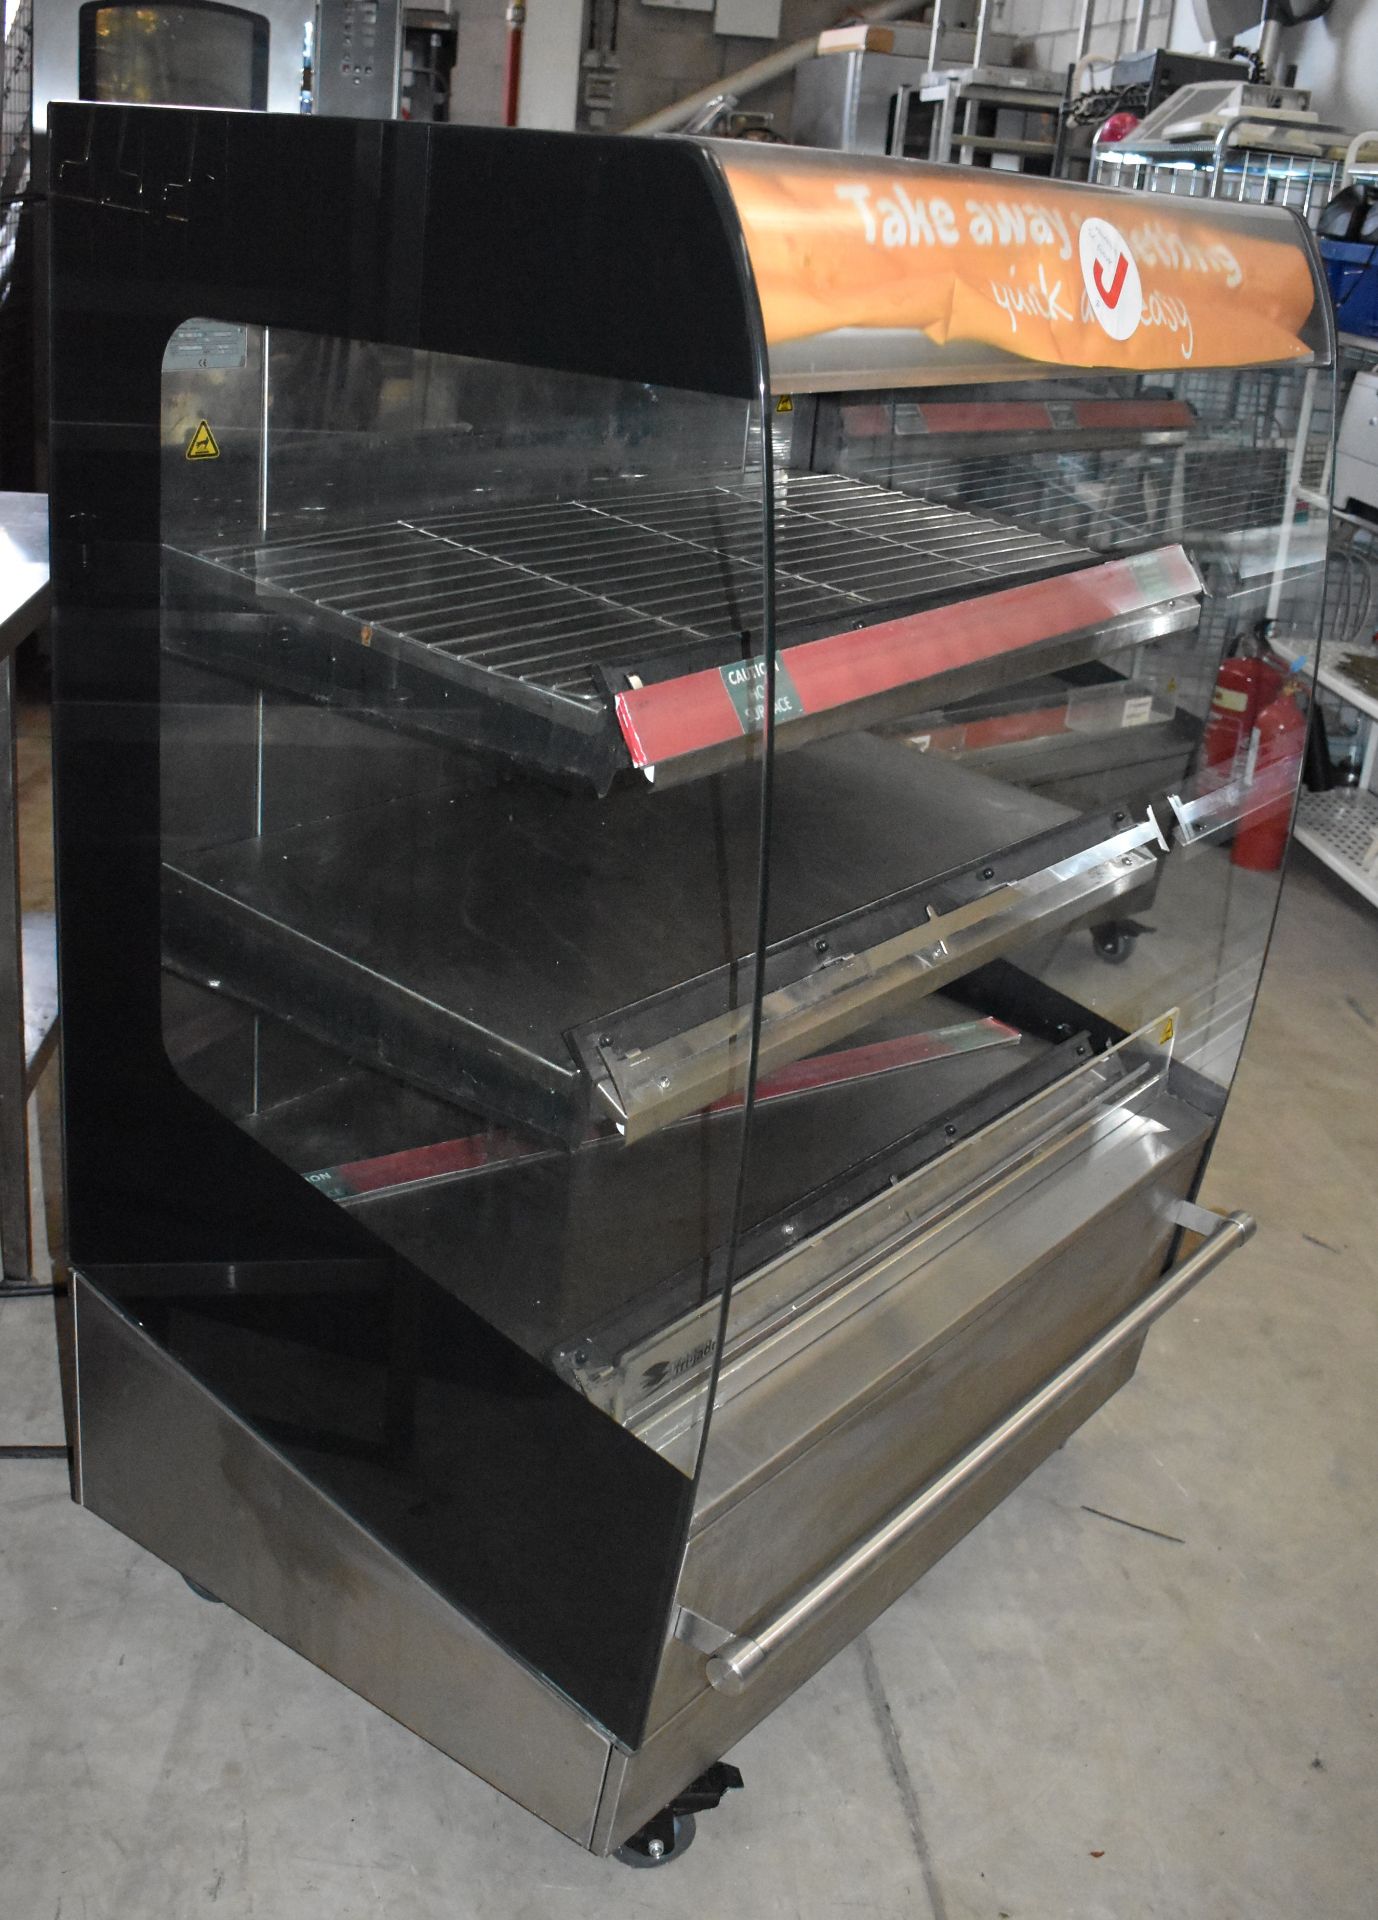 1 x Fri-Jado Three Tier Multi Deck Hot Food Warmer Heated Display Unit - Contemporary Modern - Image 2 of 9